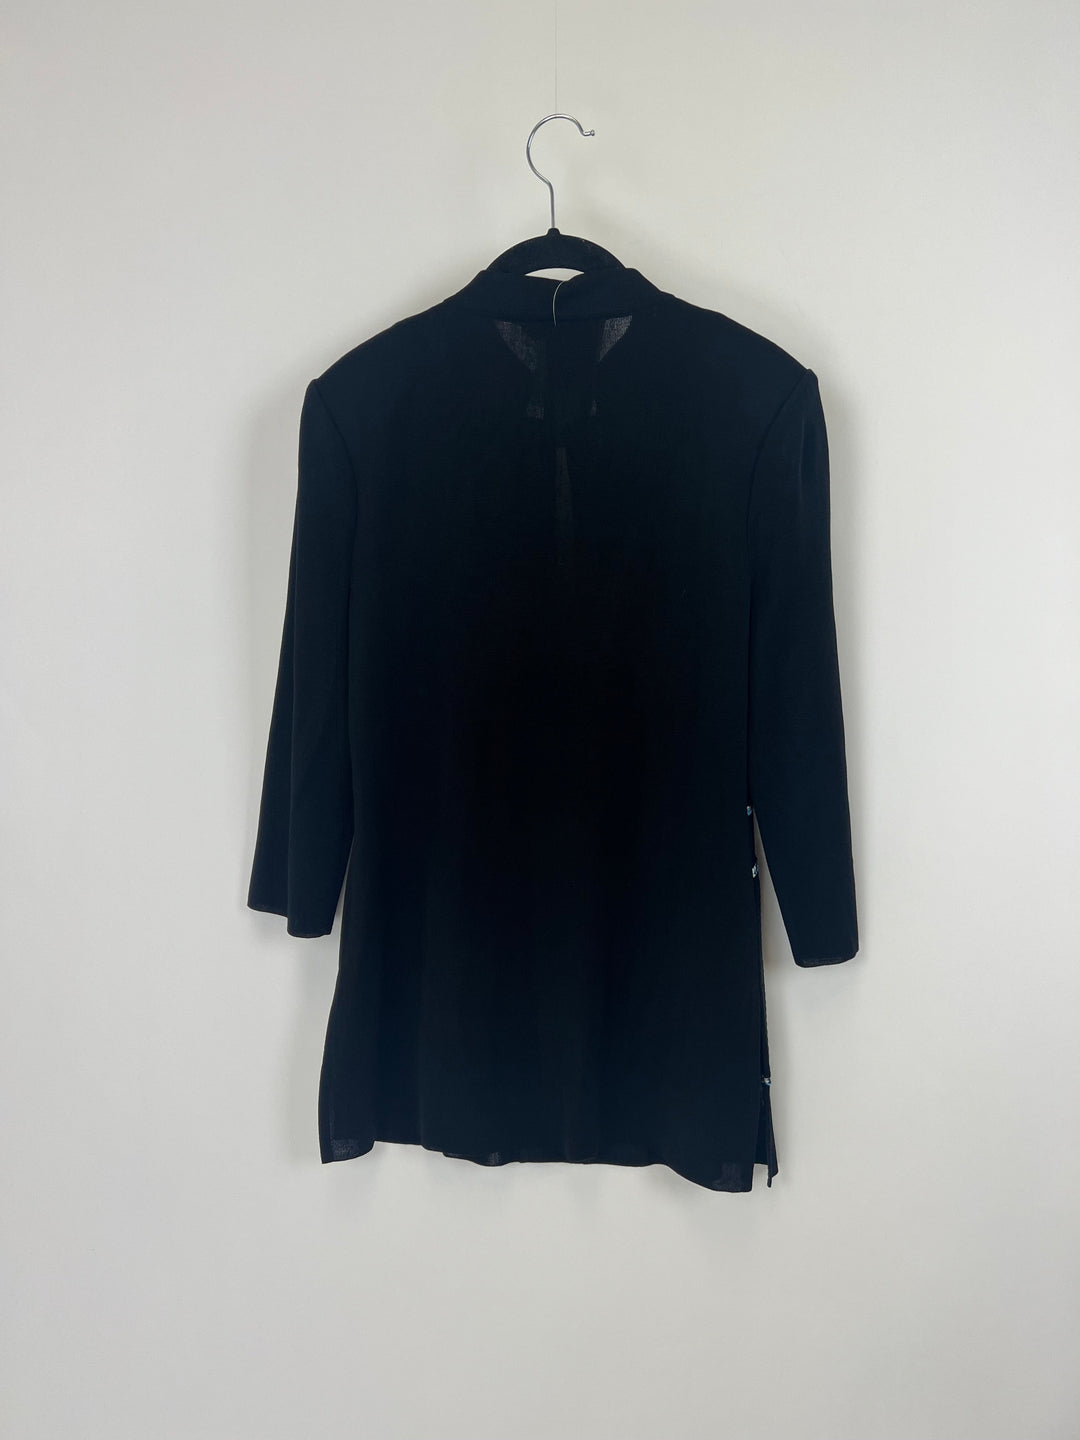 Black Ribbed Cardigan - Size 2-4